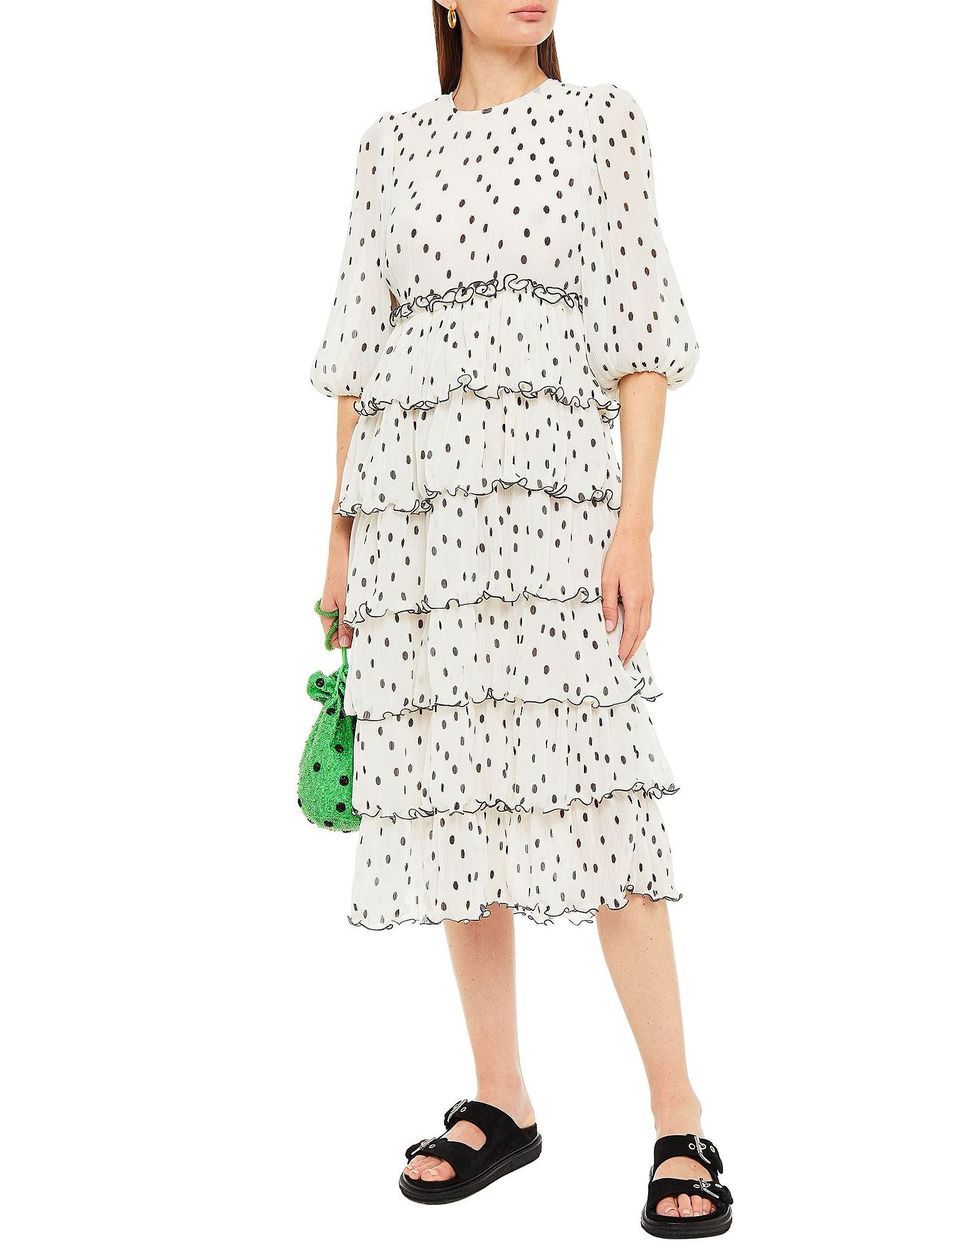 Best polka dot dresses 2023: From M&S to ASOS, Zara & more